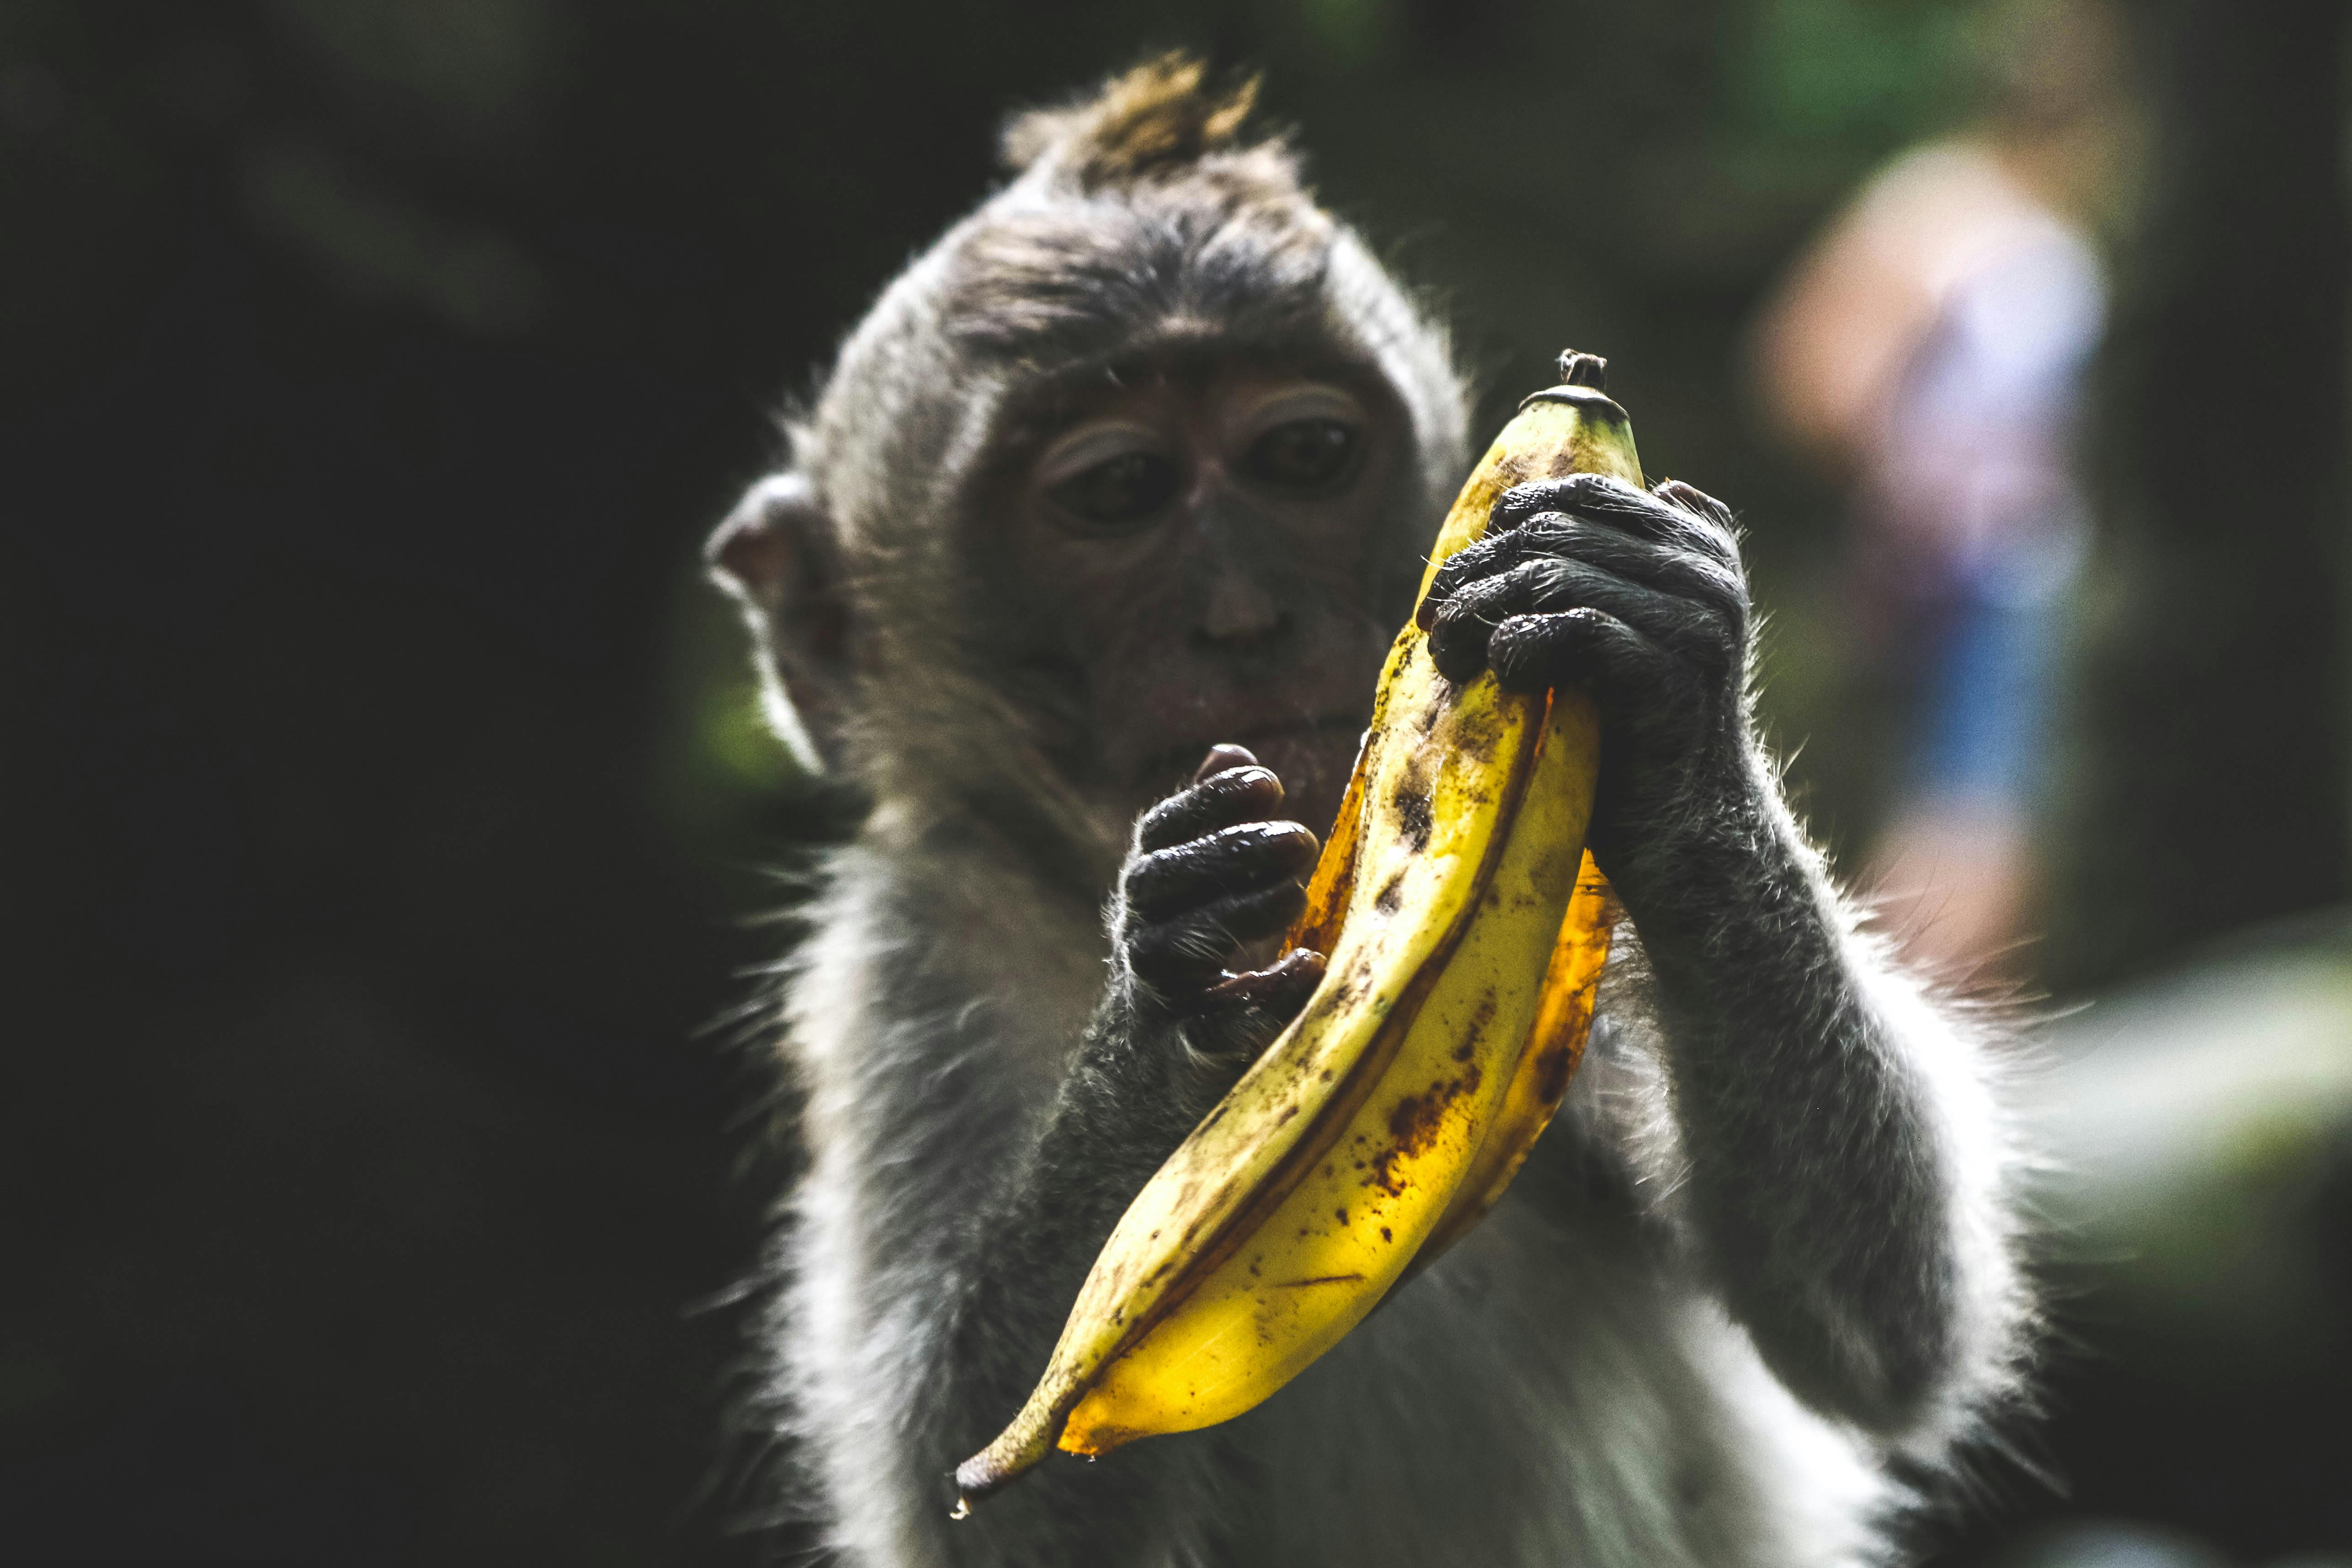 Monkey Banana Download - You need to put the monkey on the correct